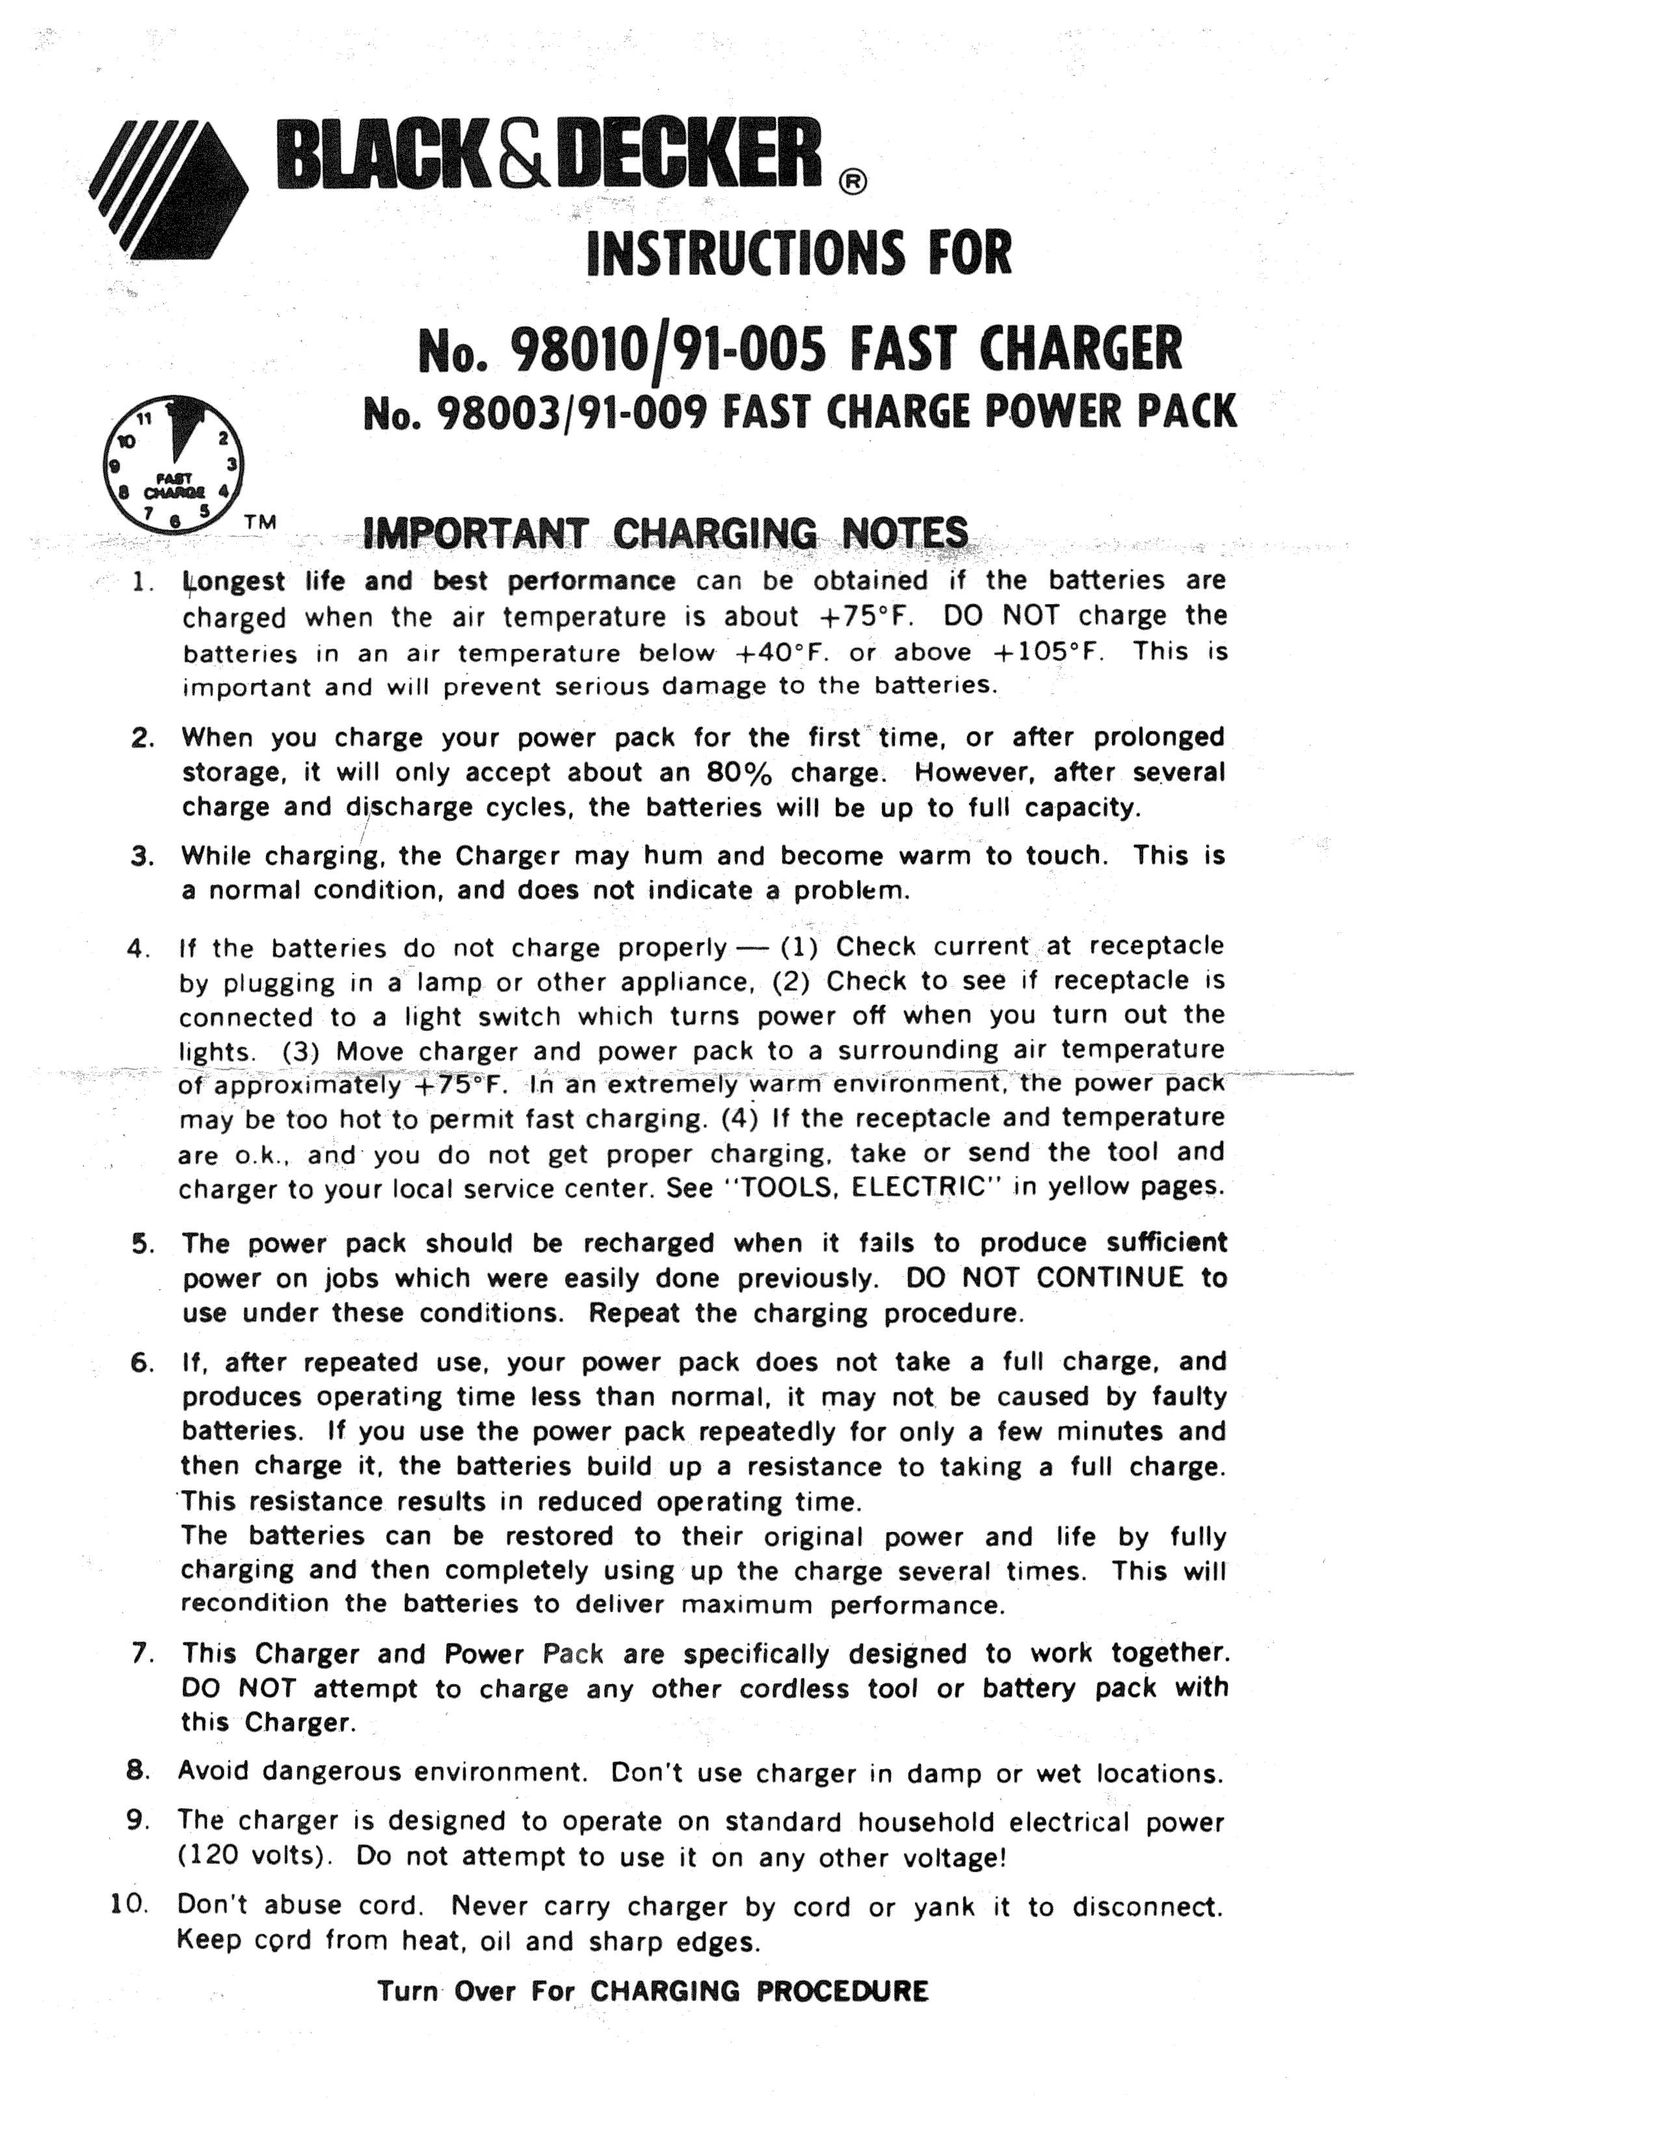 Black & Decker 91-005 Battery Charger User Manual